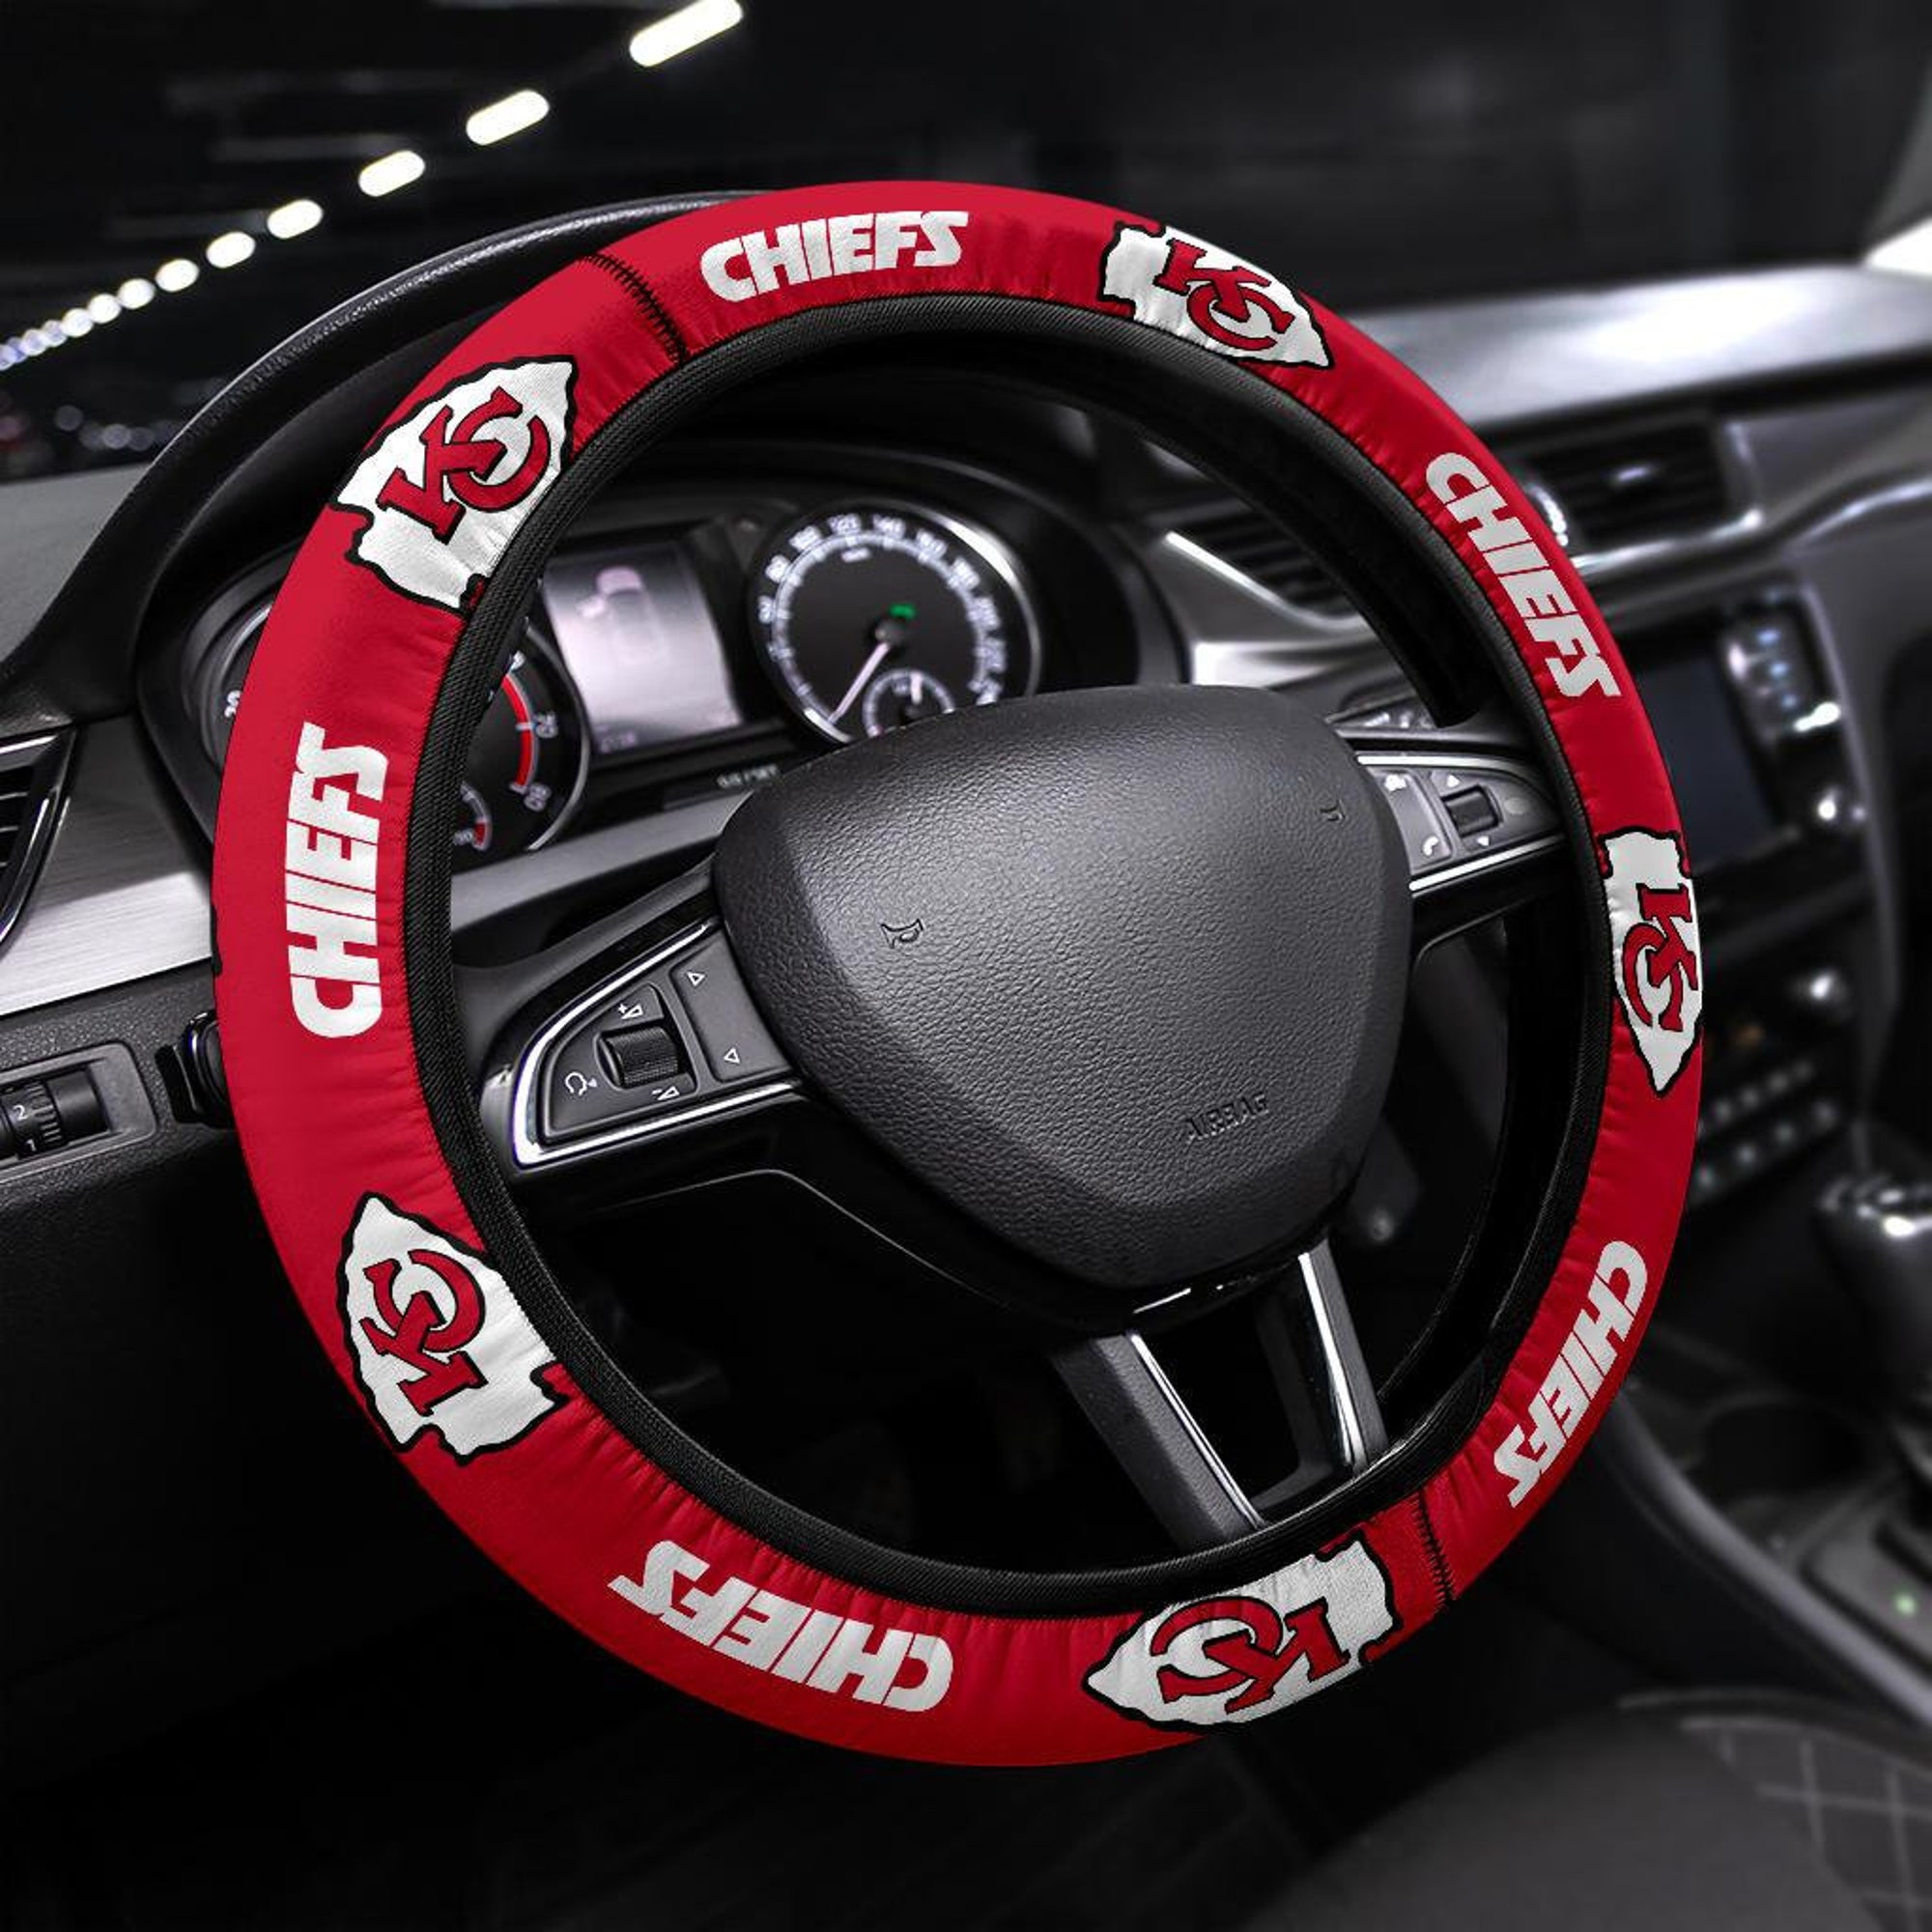 Kansas City Chiefs themed custom steering wheel cover for a fan